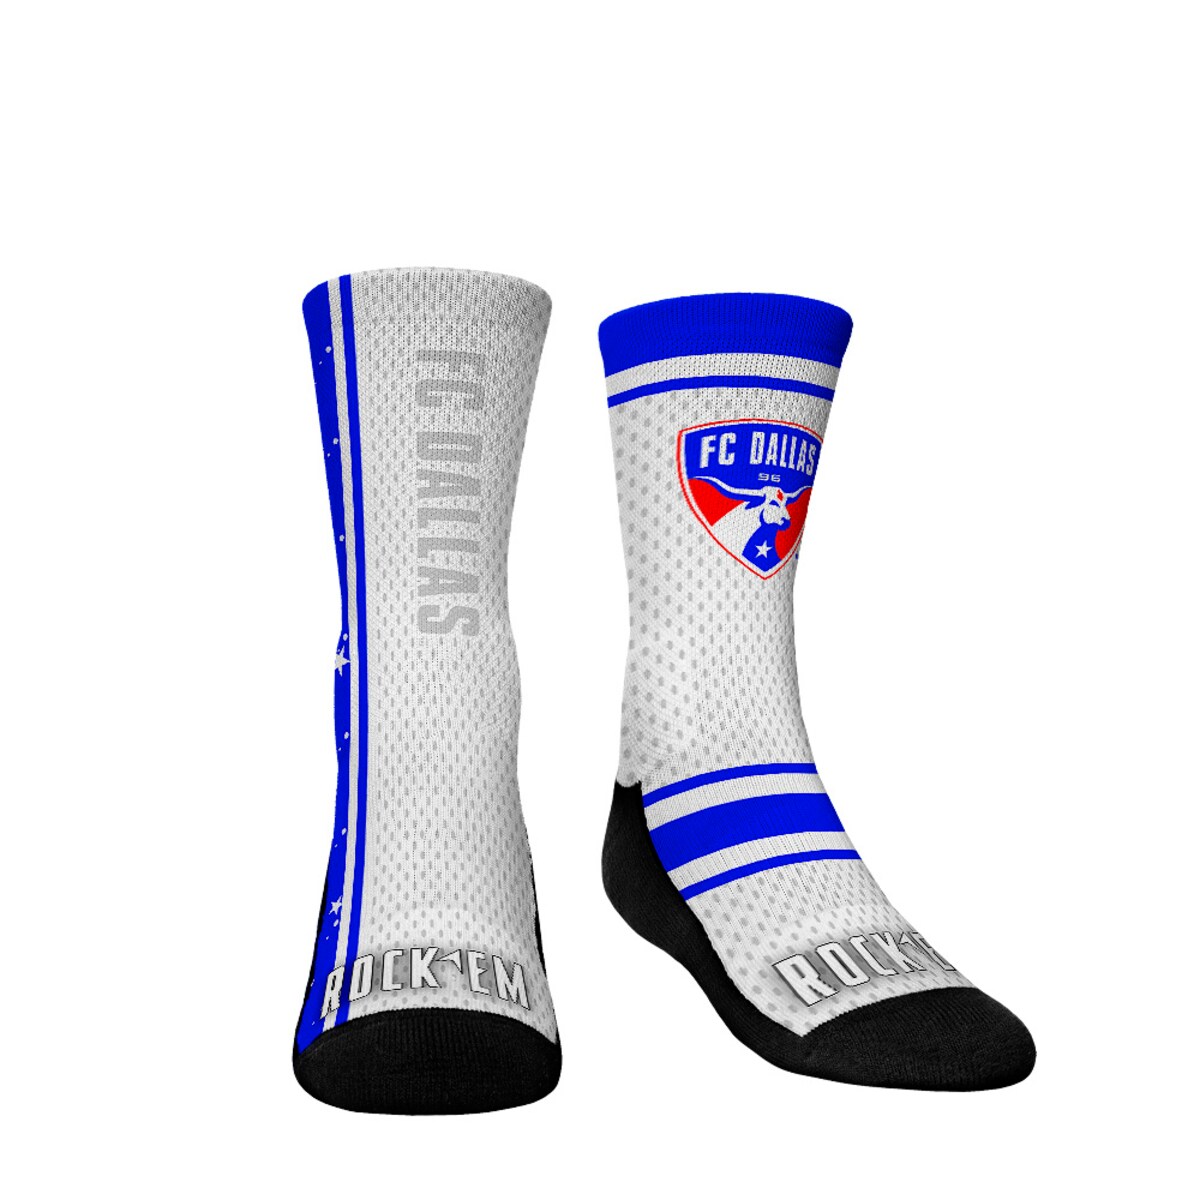 MLS FCダラス ソックス Rock Em Socks キッズ ホワイト (REK 2017 Youth MLS Jersey Match Up Sock)